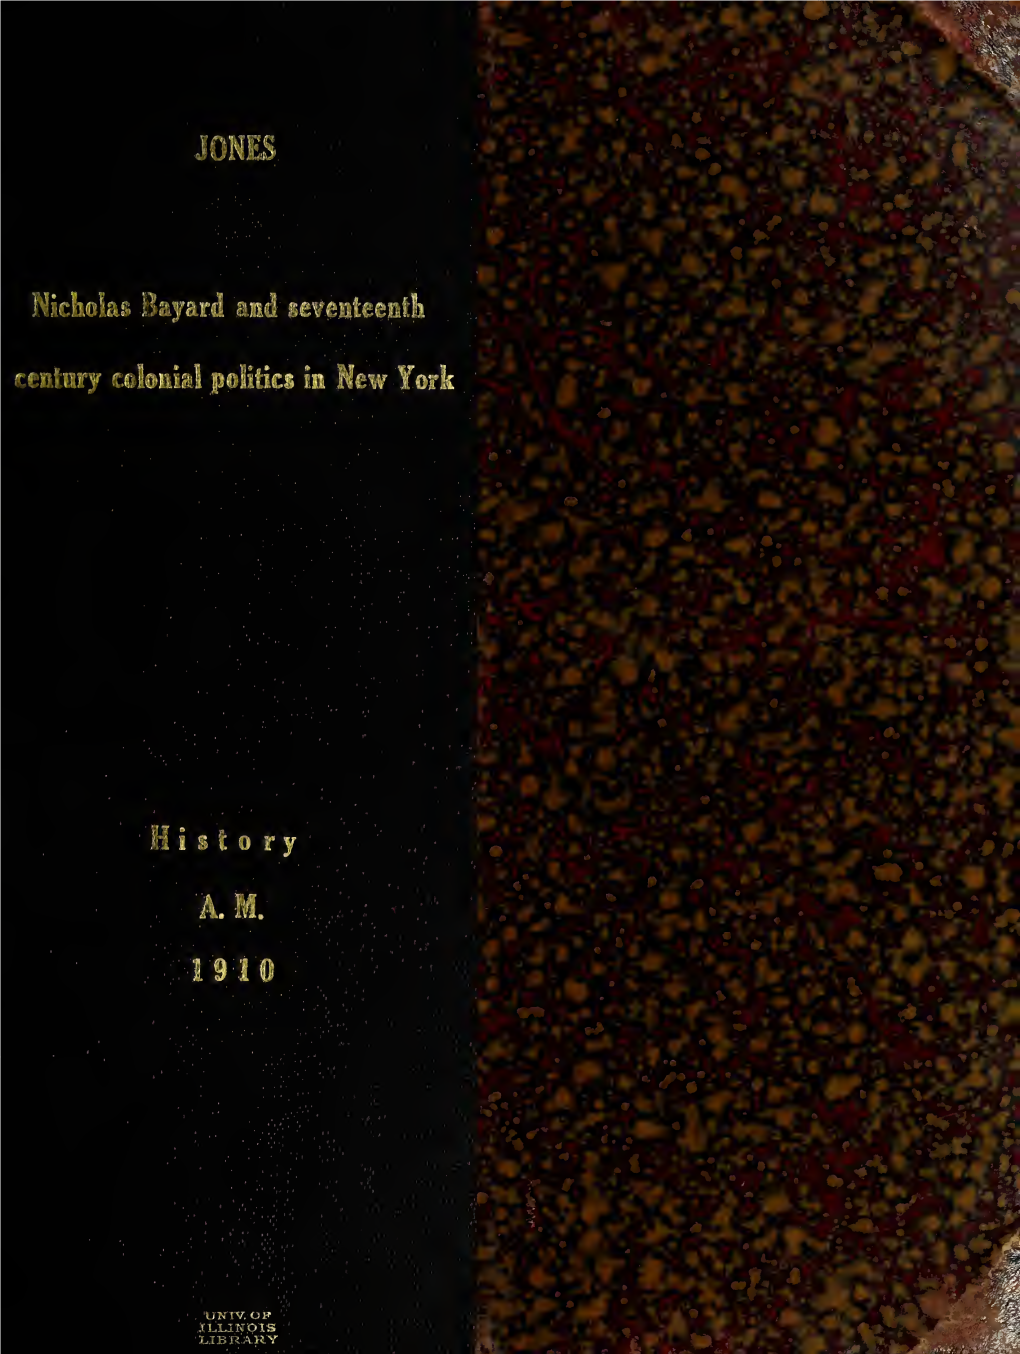 Nicholas Bayard and Seventeenth Century Colonial Politics in New York